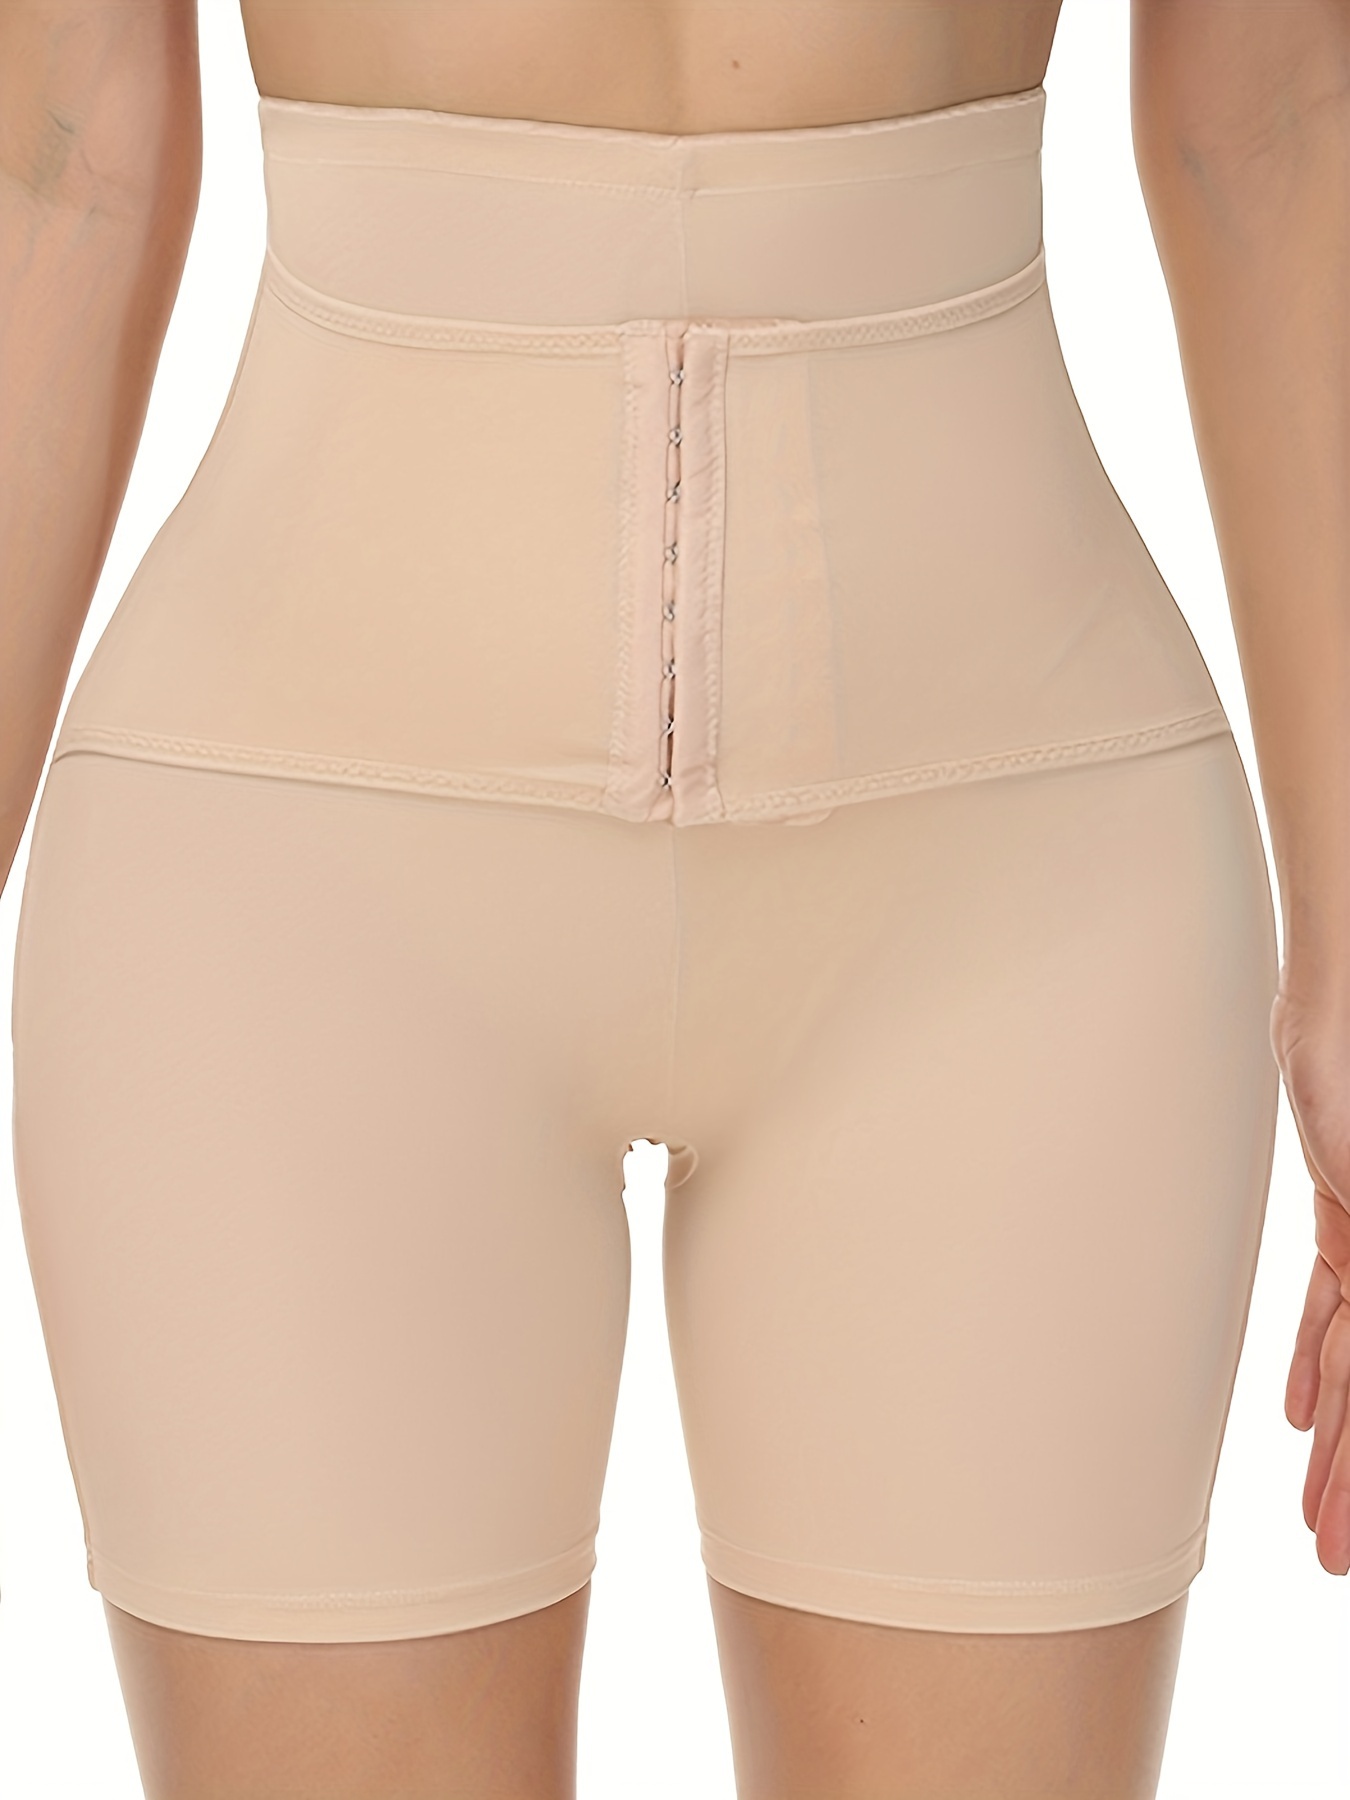 Nylon Spandex High Waist Sports Shorts Tummy Control Lift up Butt